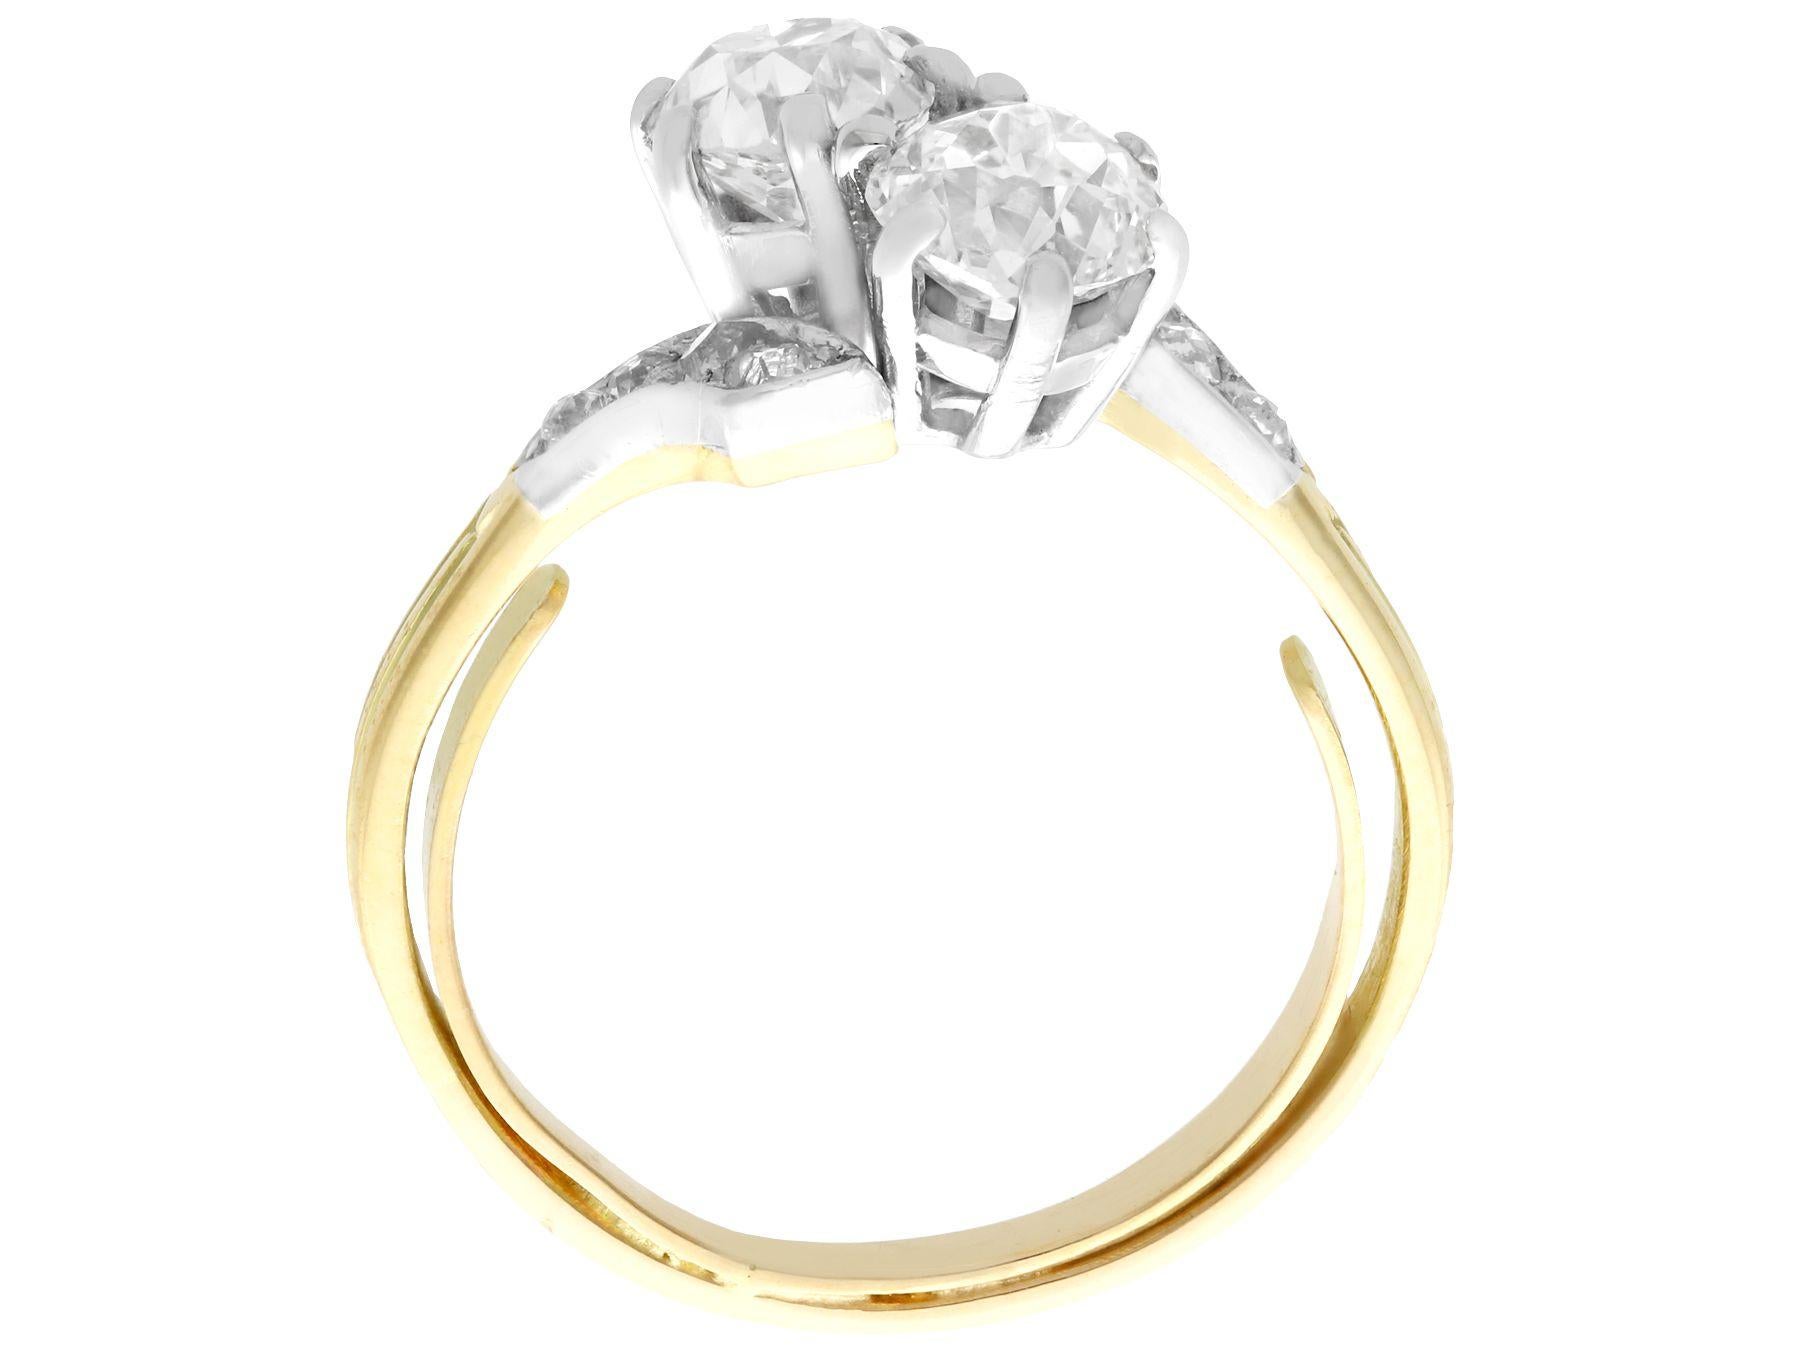 Women's Antique Victorian 2.36 Carat Diamond and Yellow Gold Twist Ring